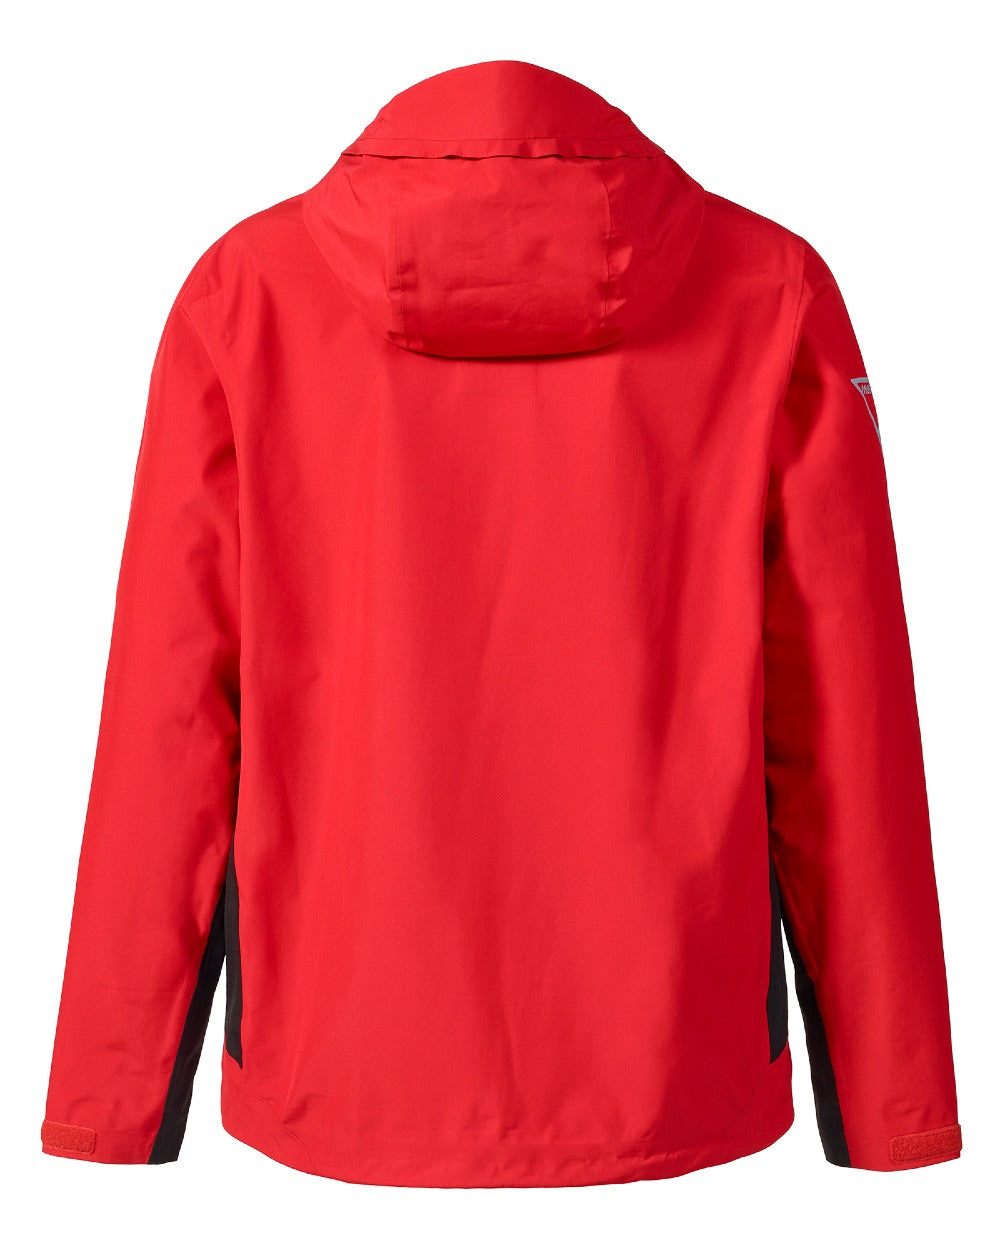 Ture Red coloured Musto Mens Lpx Gore-tex Infinium Aero Jacket on white background 